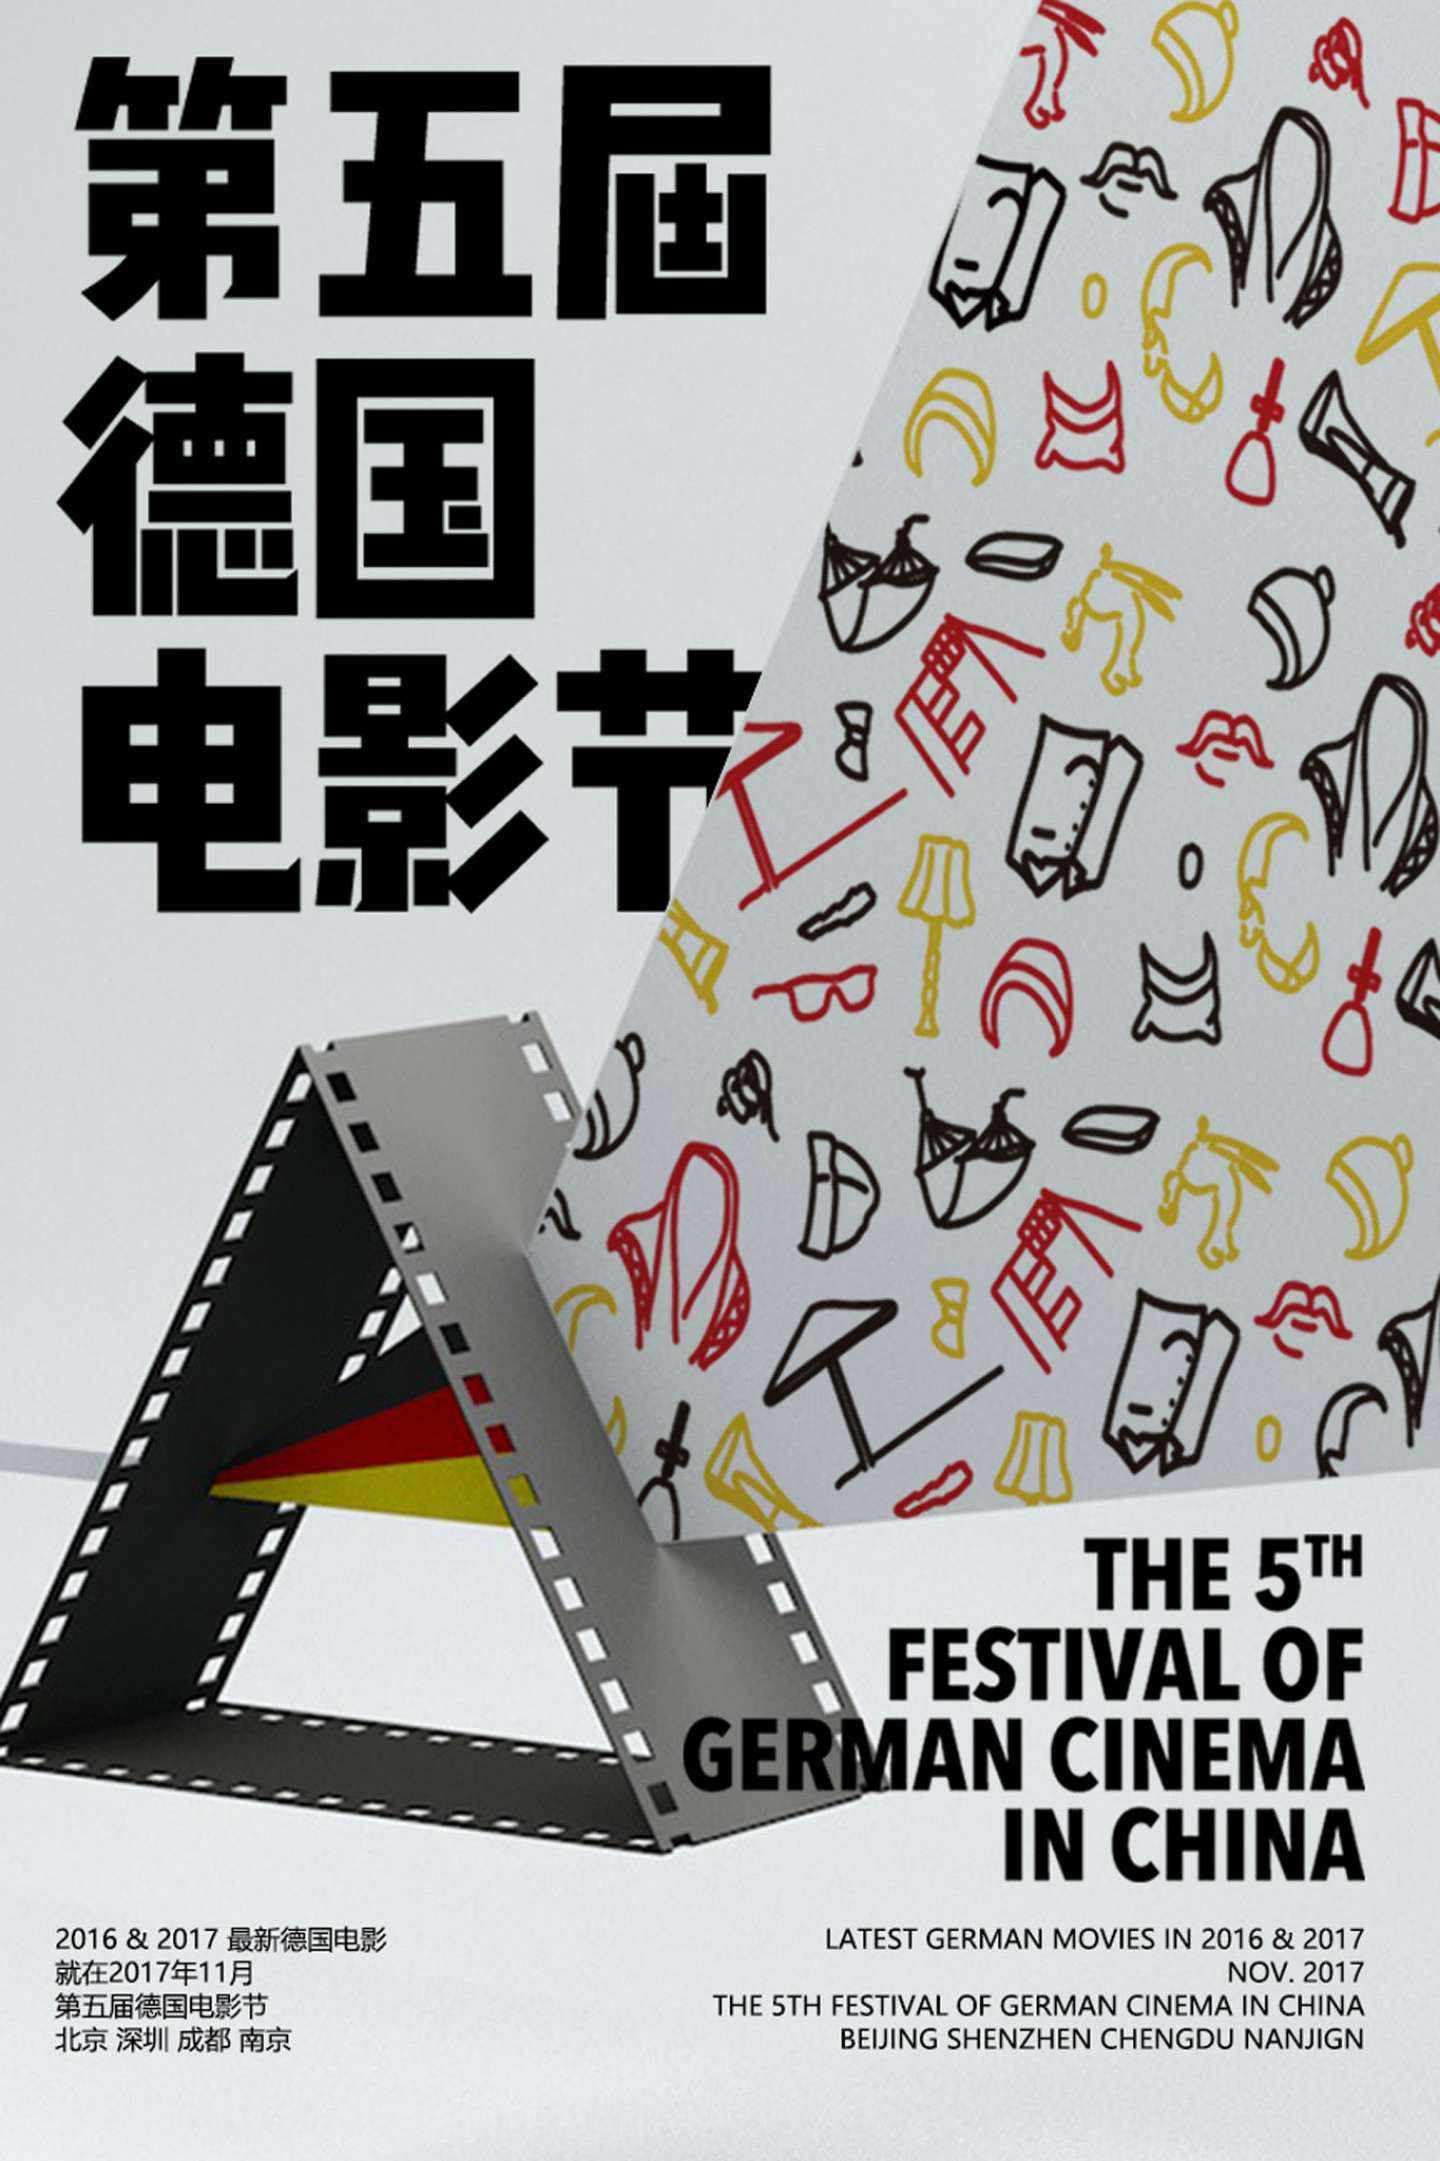 FESTIVAL OF GERMAN CINEMA IN CHINA​